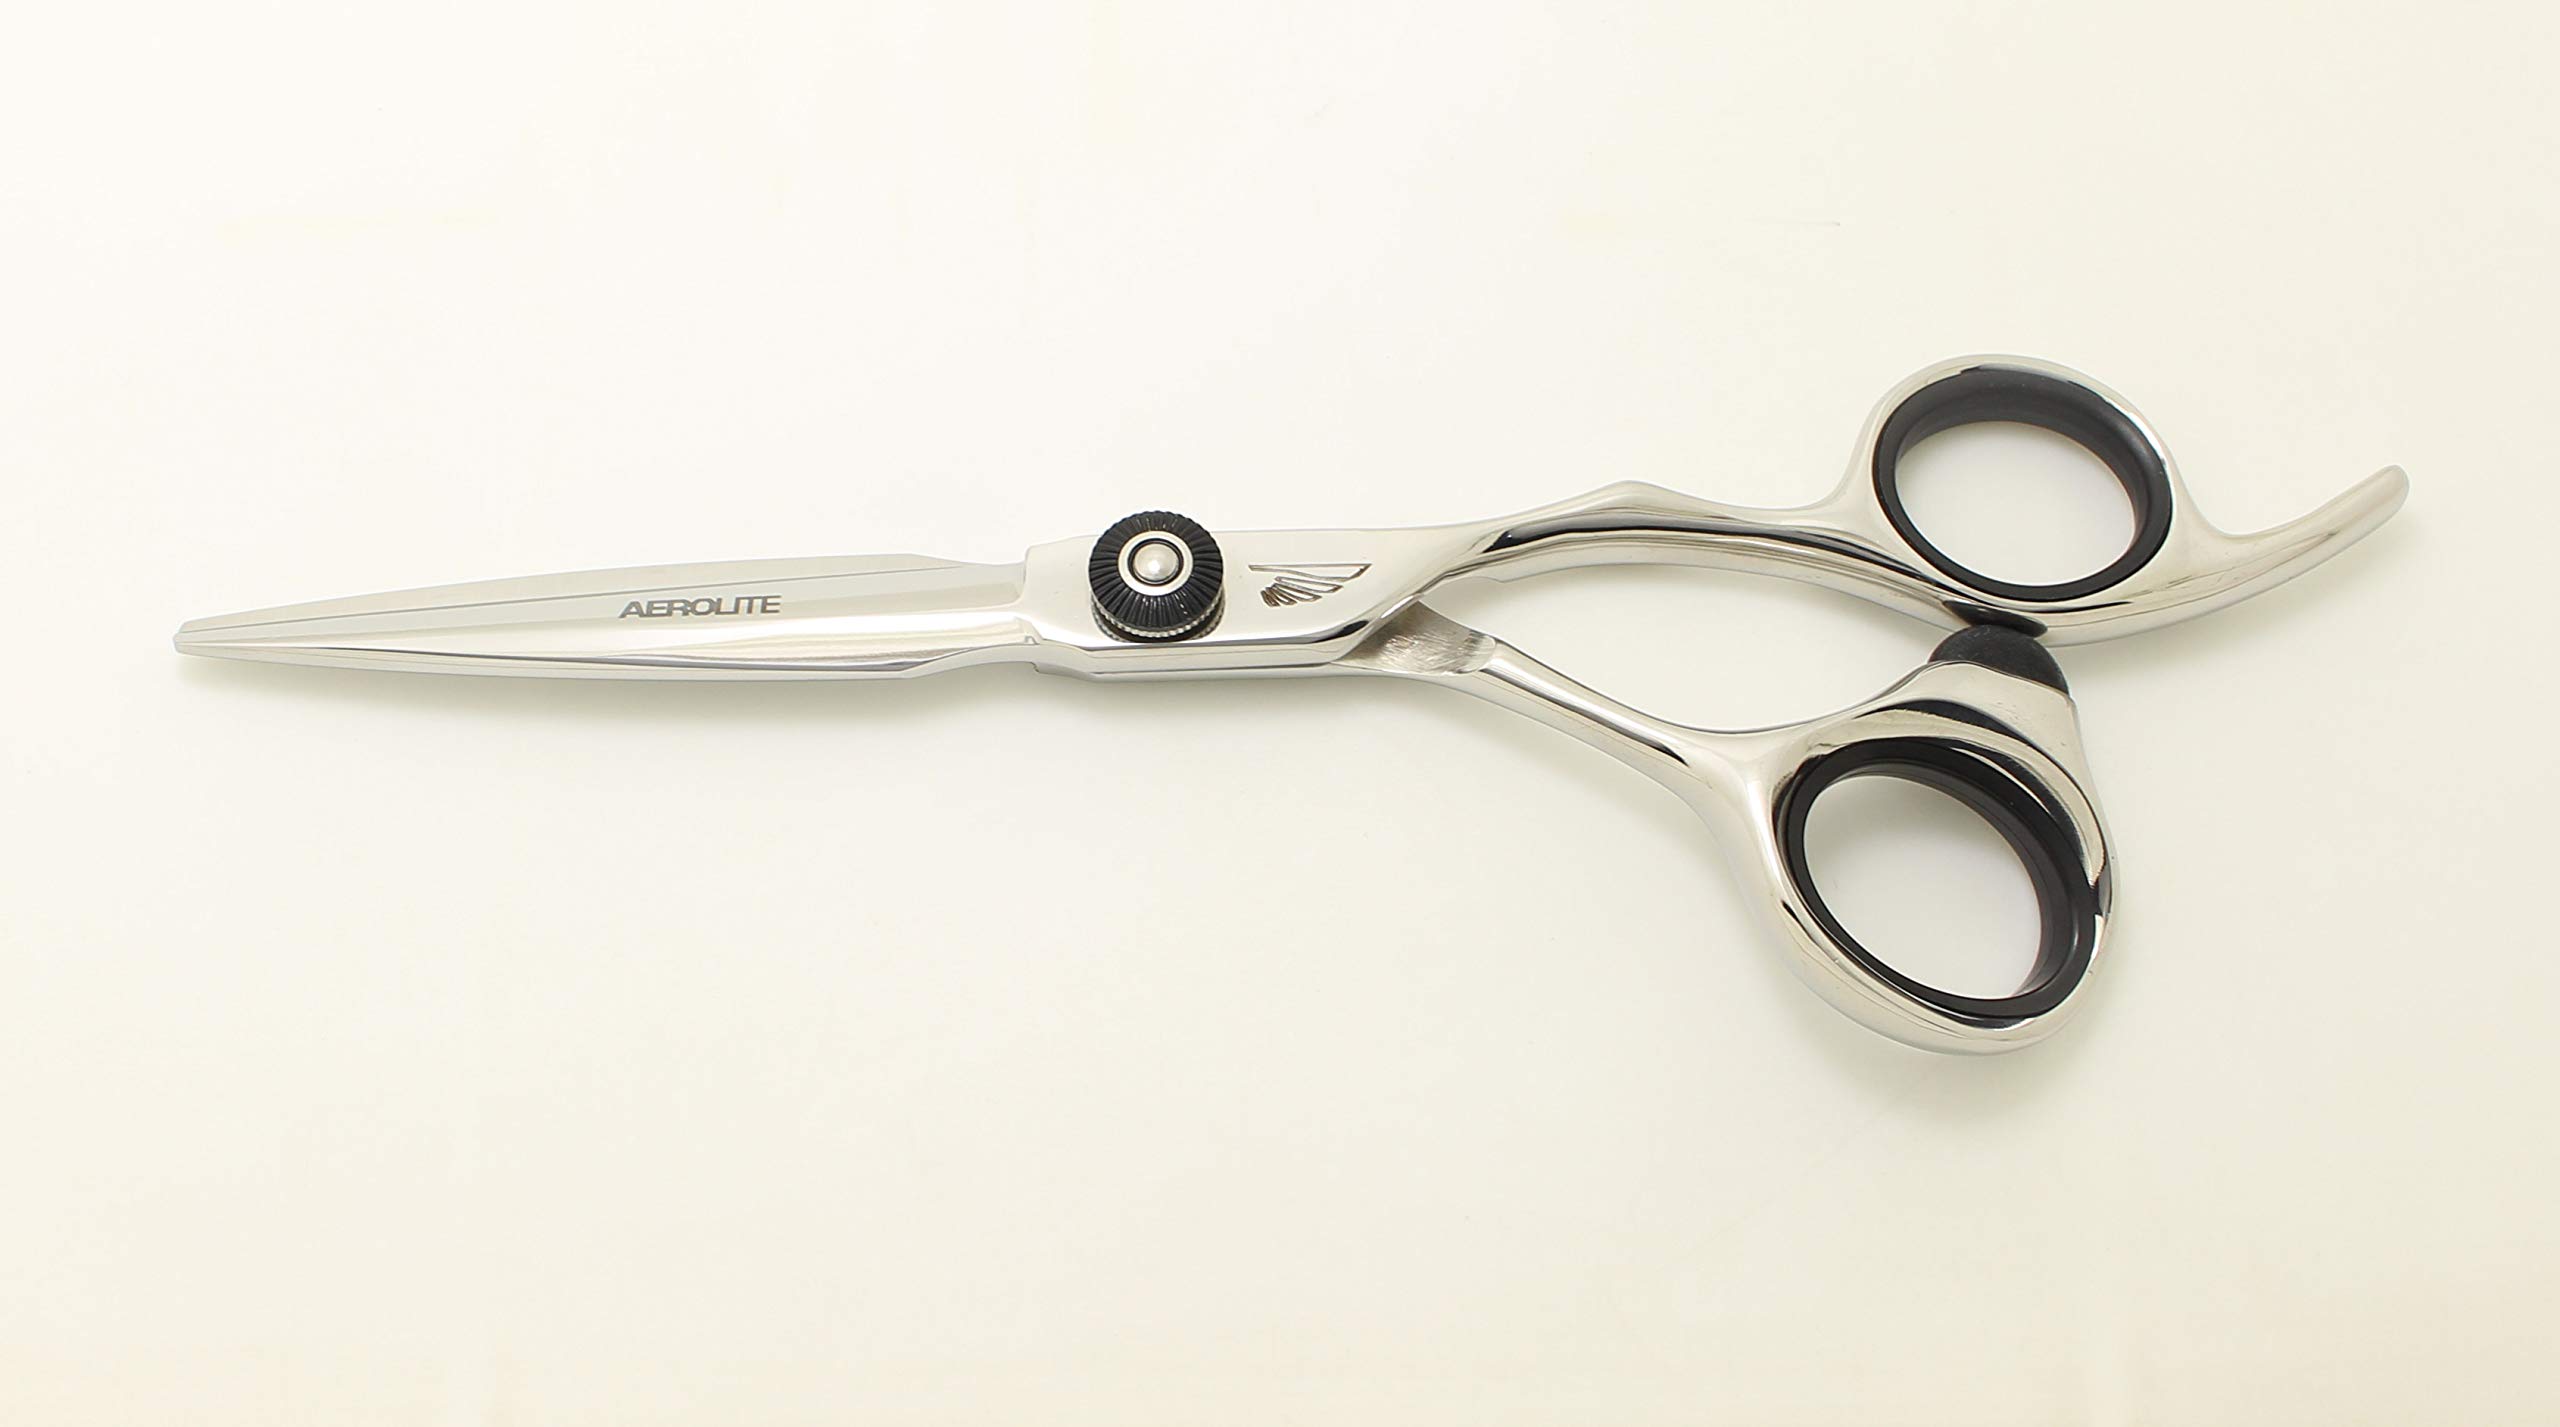 Japanese Hitachi Professional Hair Cutting Scissors-Premium ATS-314 Japanese Stainless Steel Haircut Shears-Diamond Point Edge-Barber Shear-Beautician Cosmetology Salon Scissor 6.0